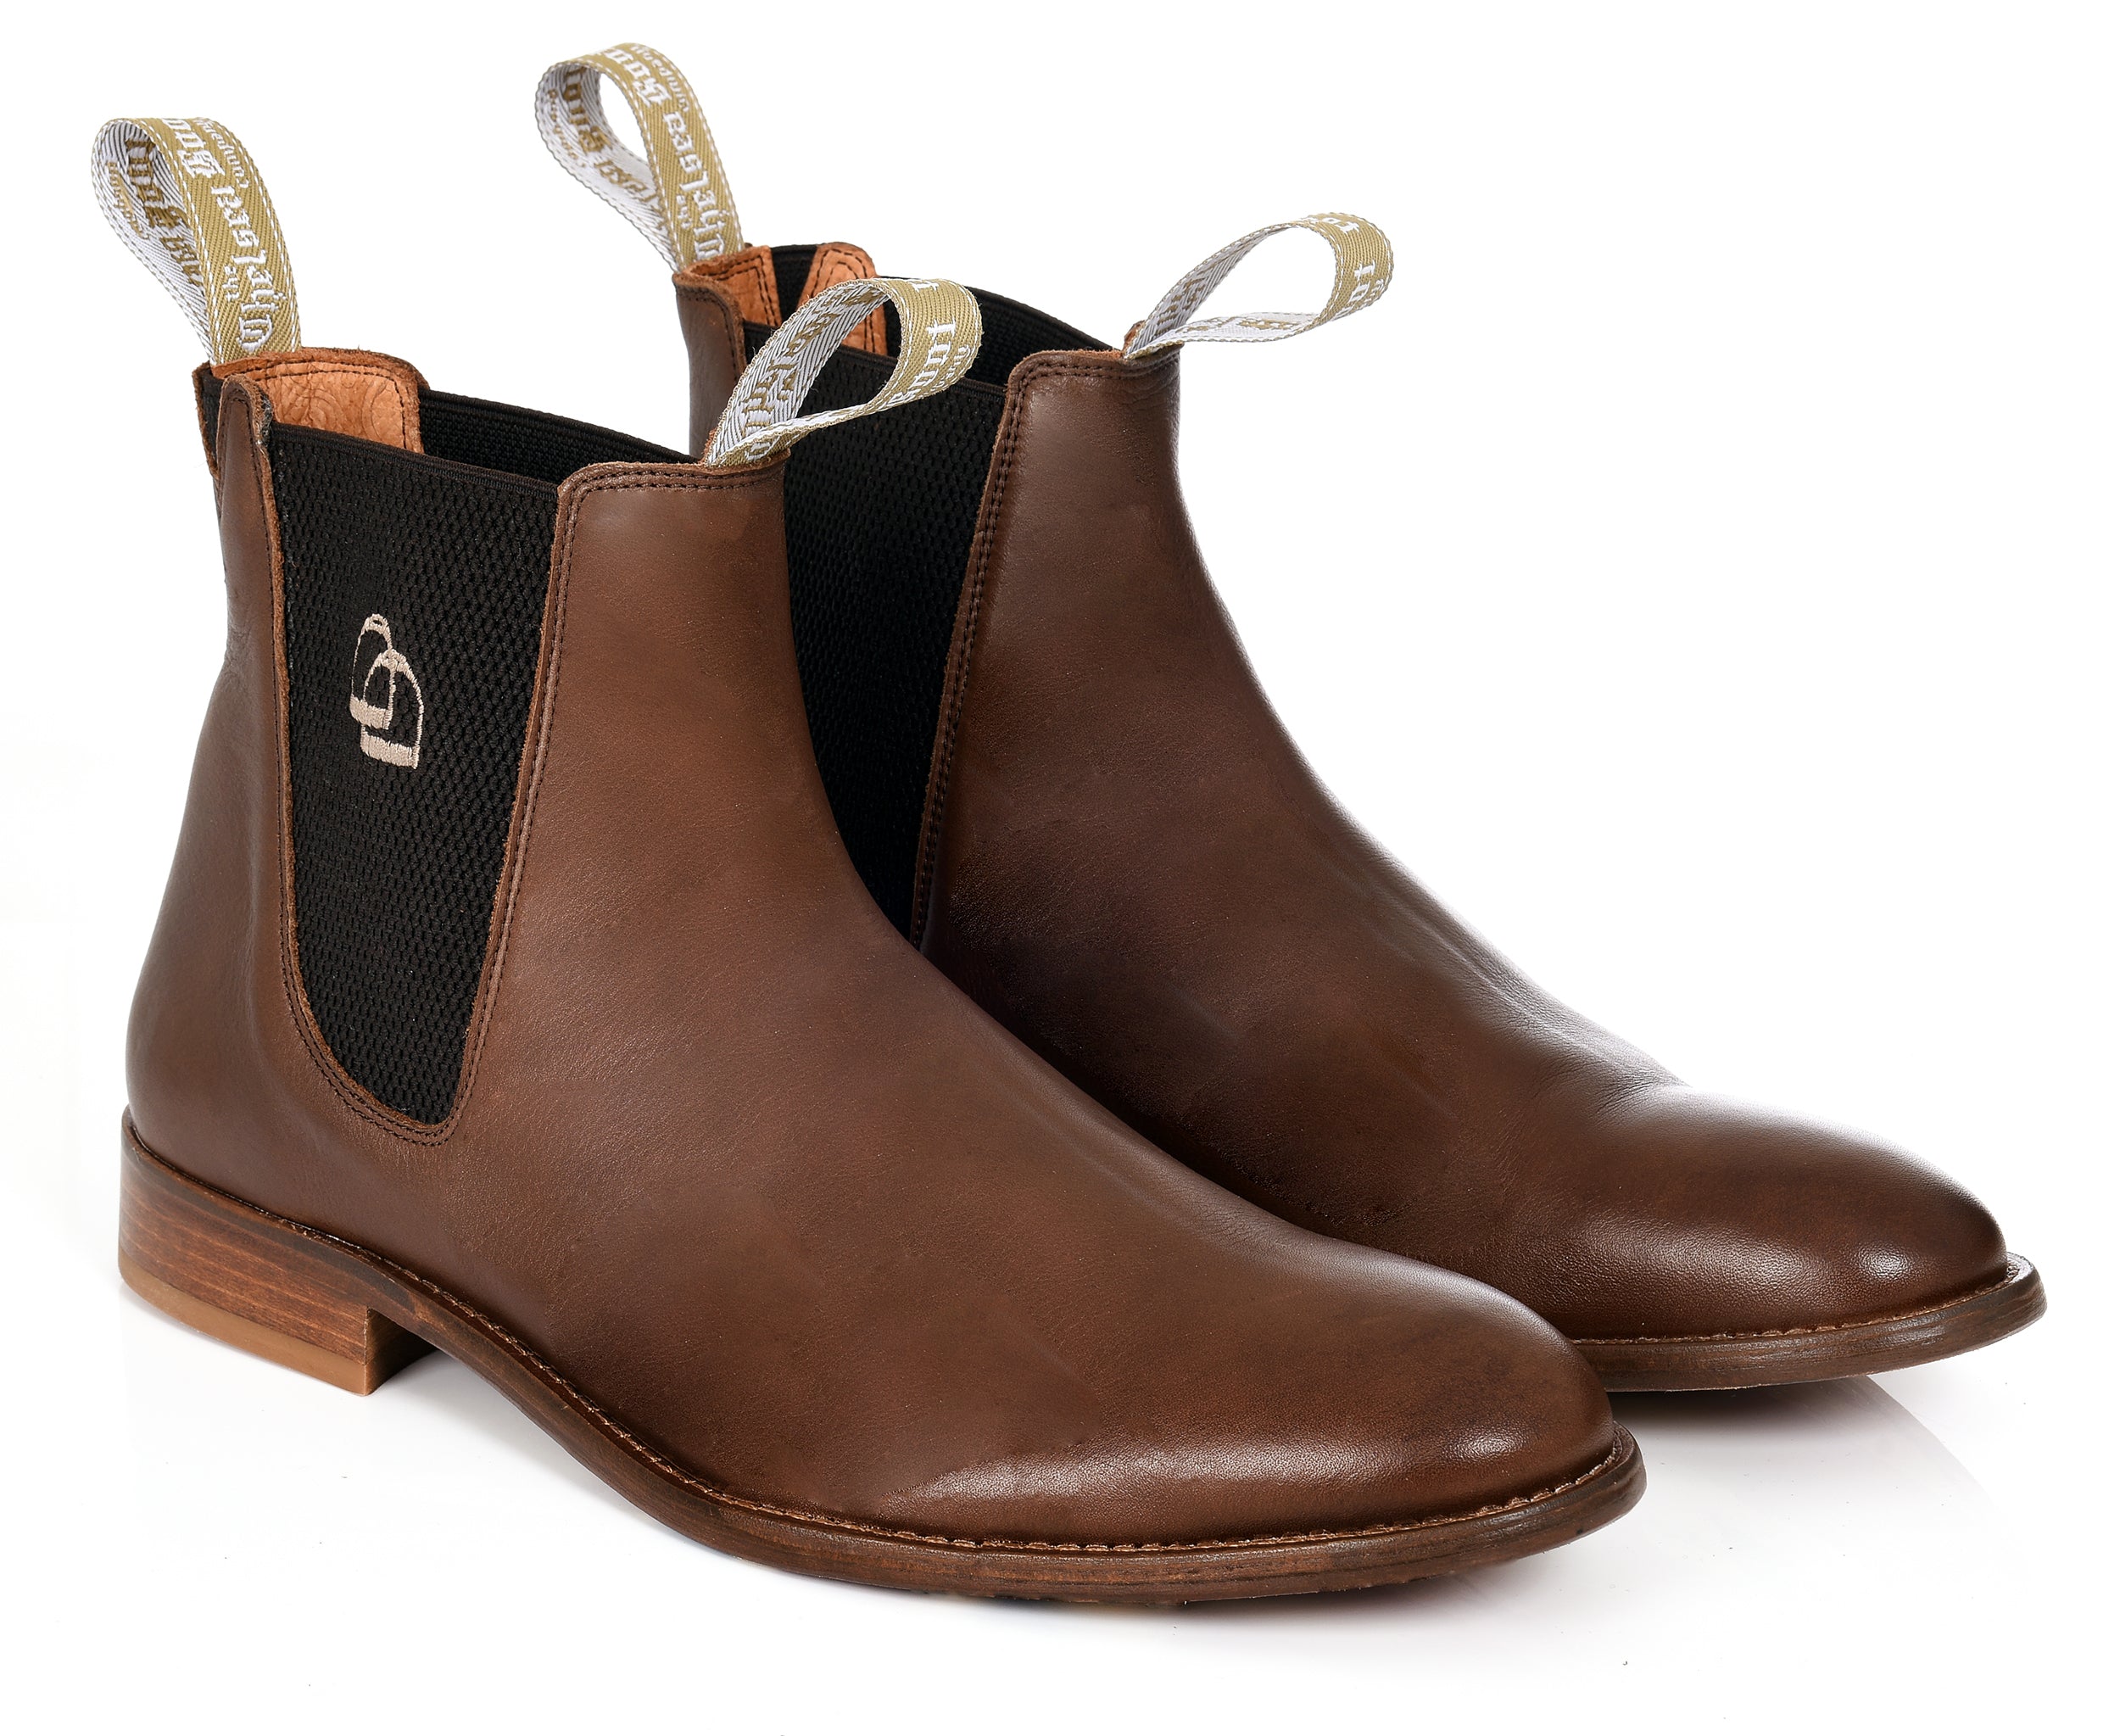 Men’s The Original Chelsea Boot - Brown 7.5 Uk The Chelsea Boot Co Est. 1851